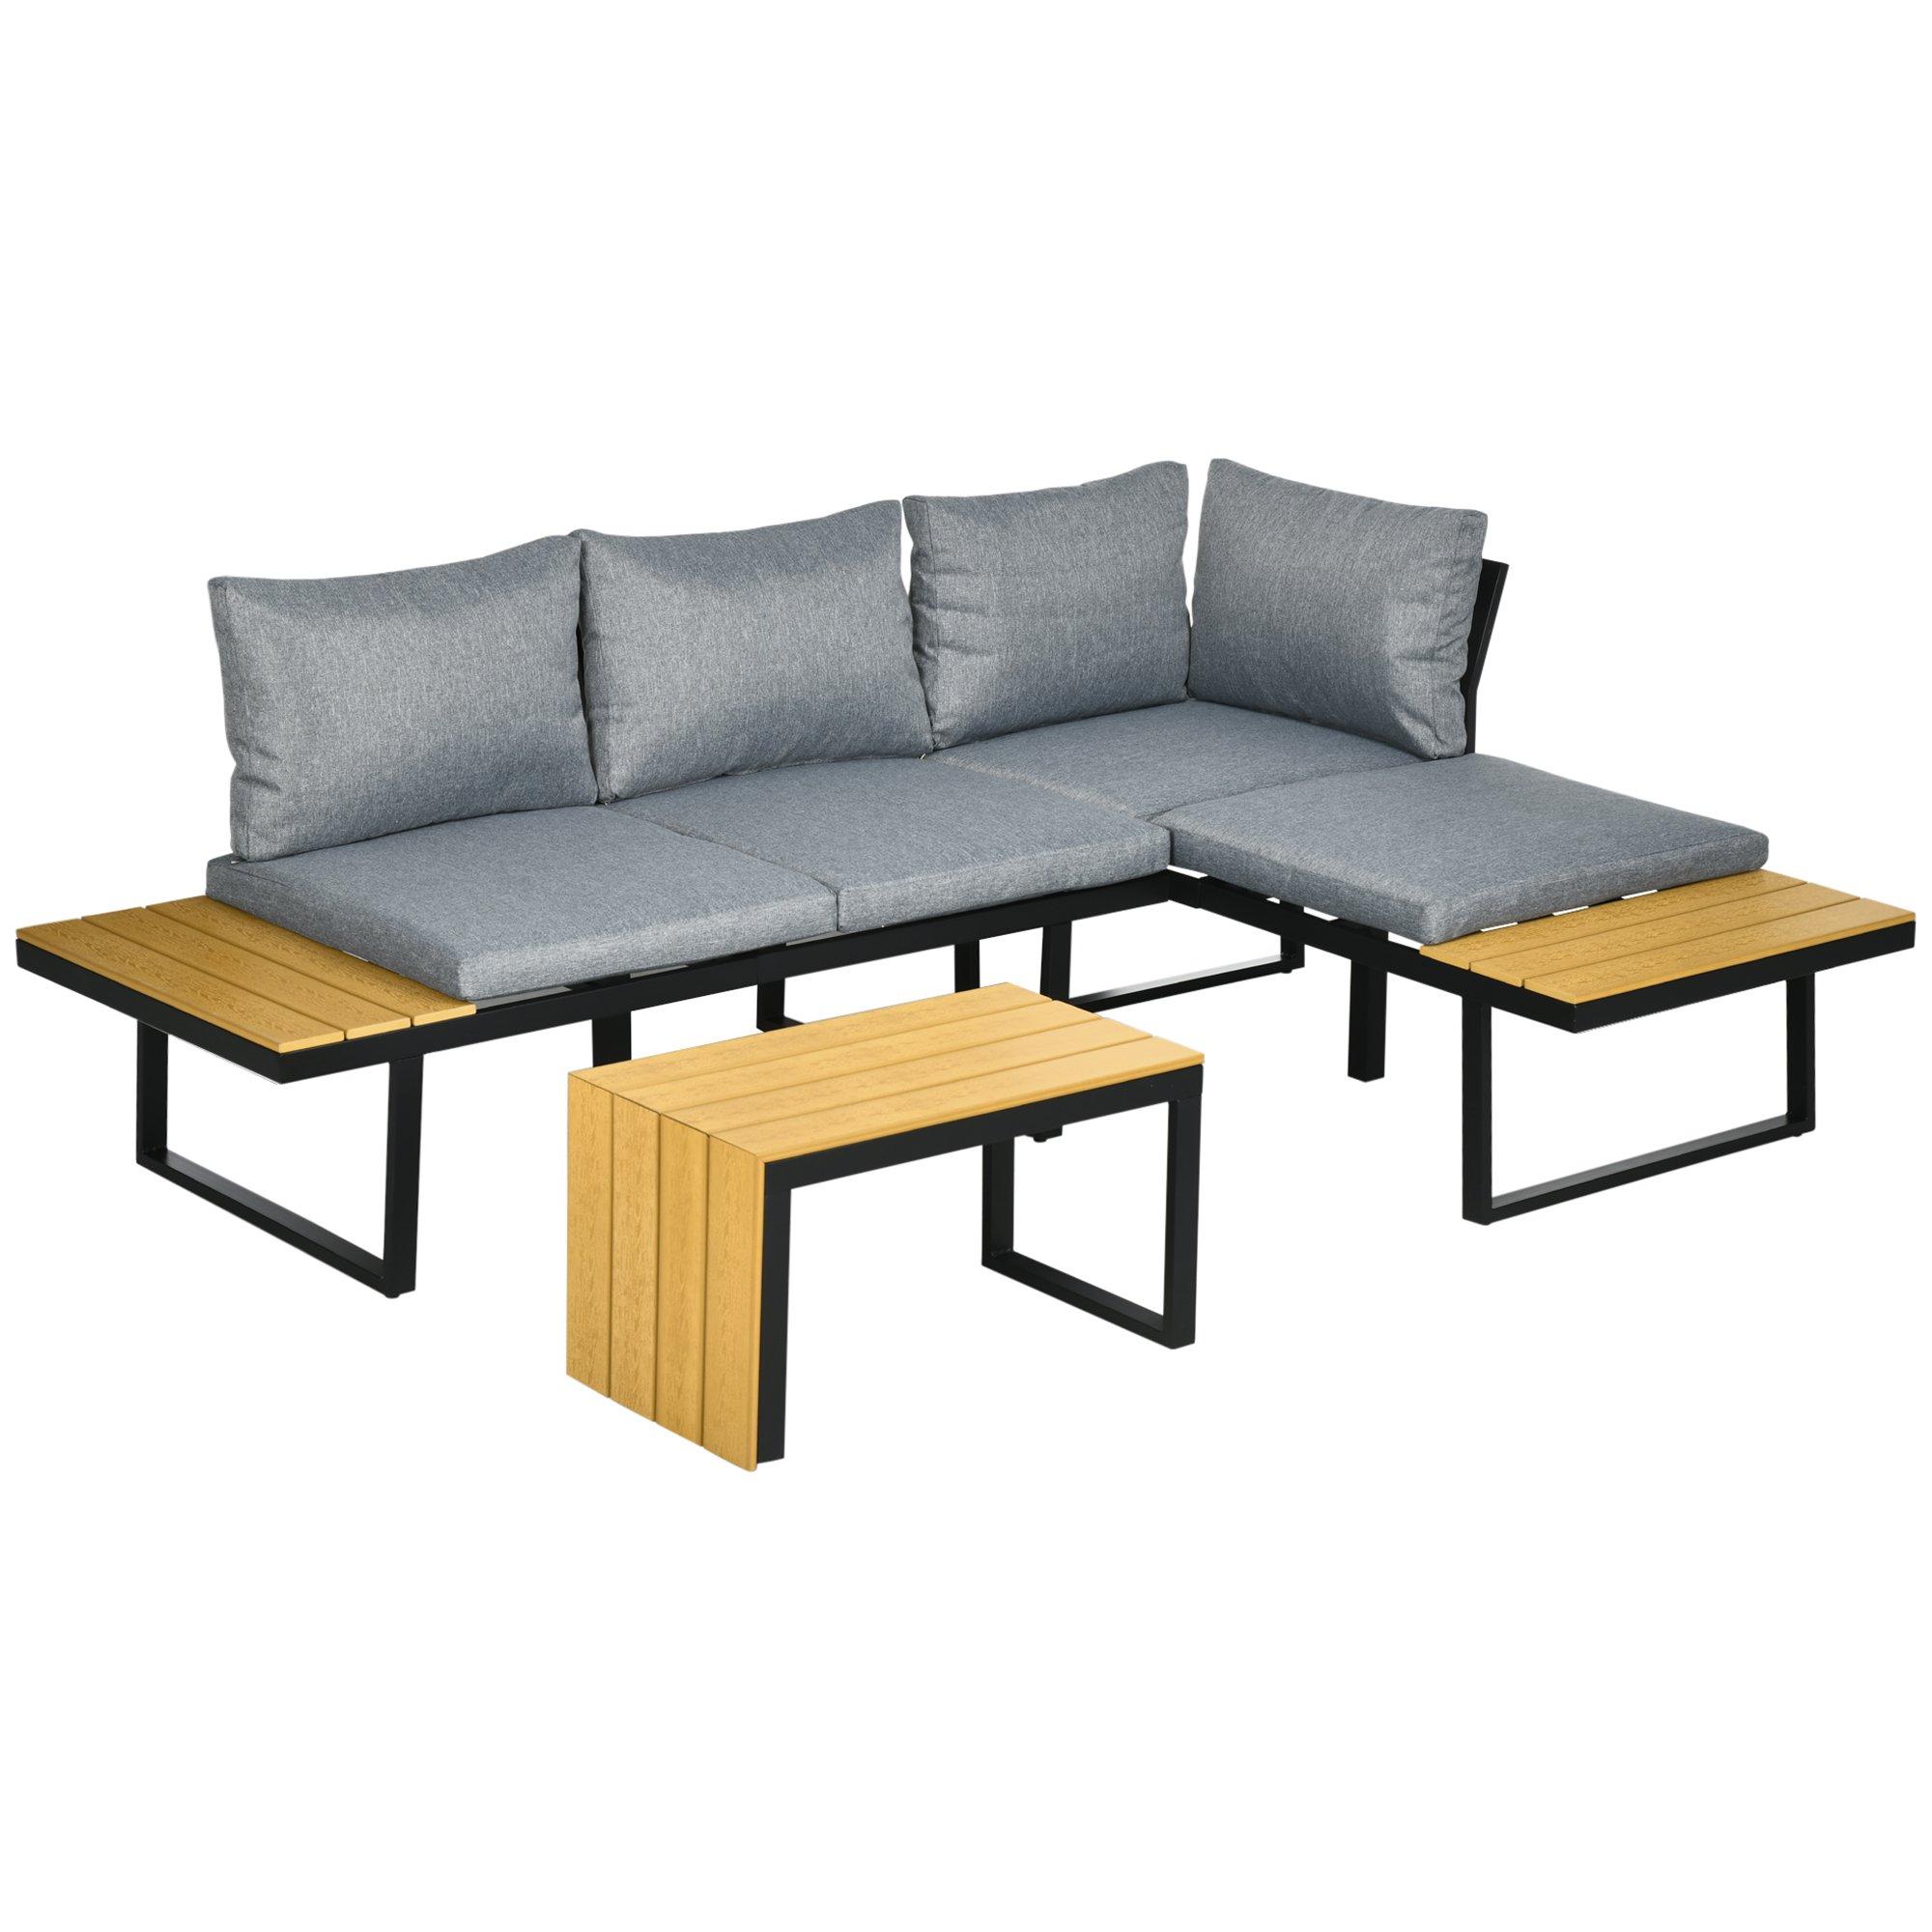 3PCs Patio Furniture Set w/ Cushions, Wood Grain Plastic Top Table